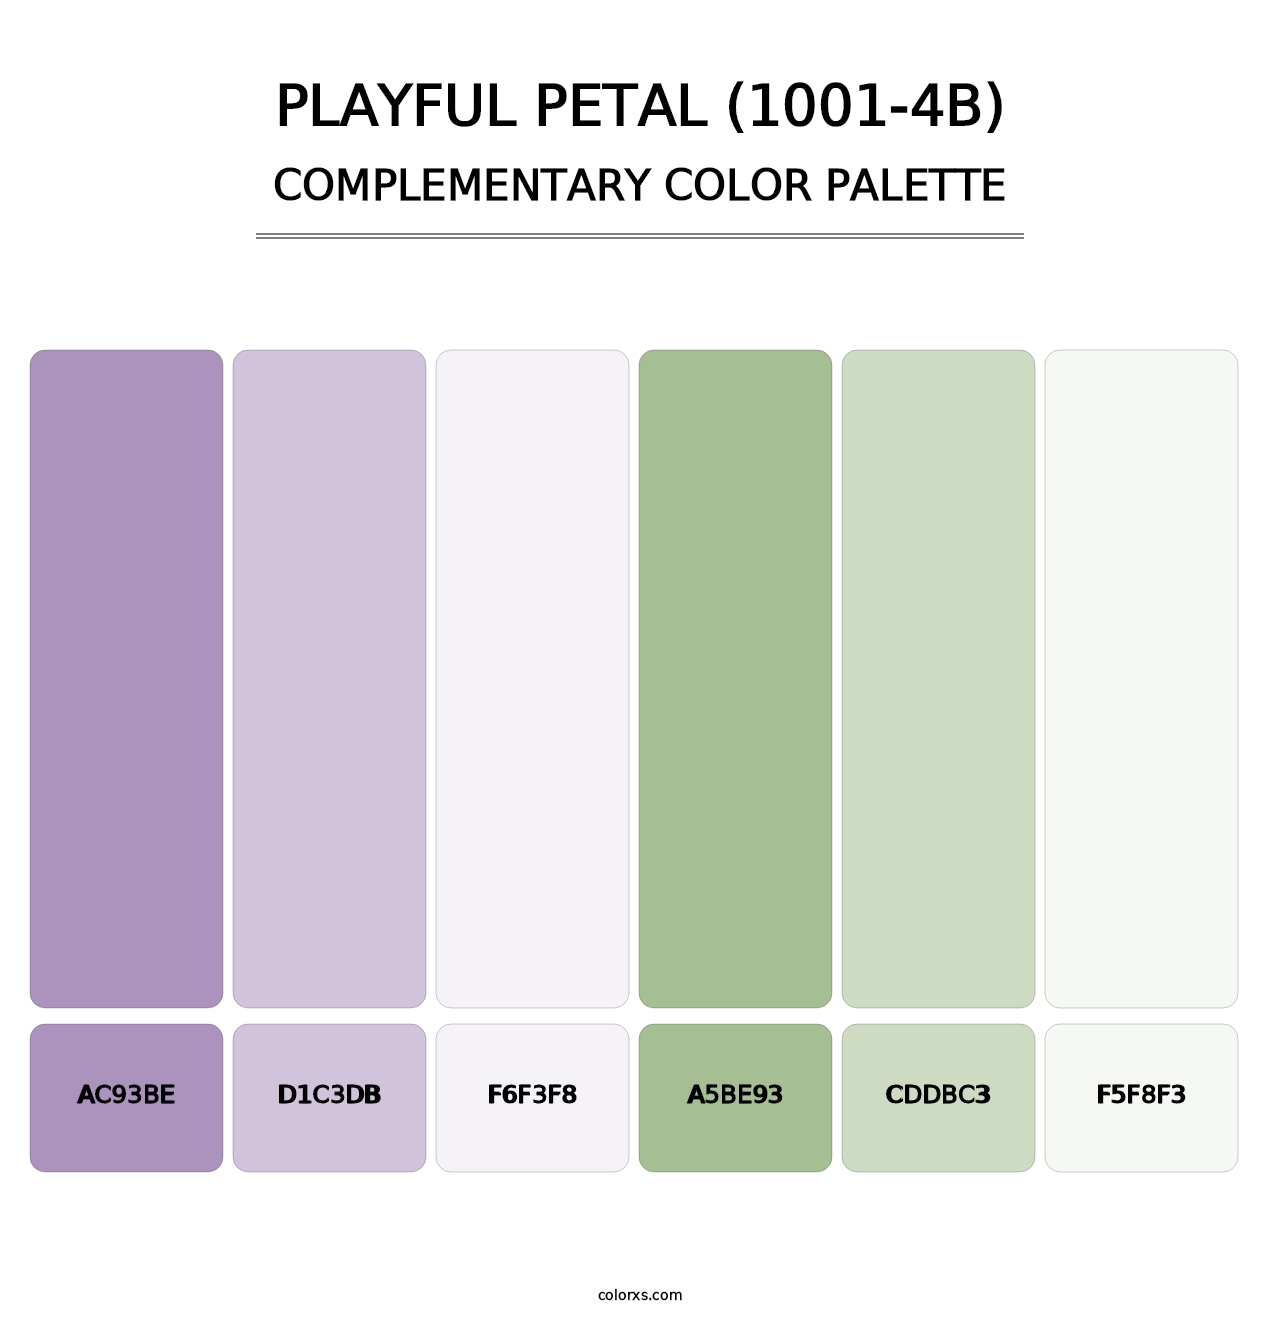 Playful Petal (1001-4B) - Complementary Color Palette